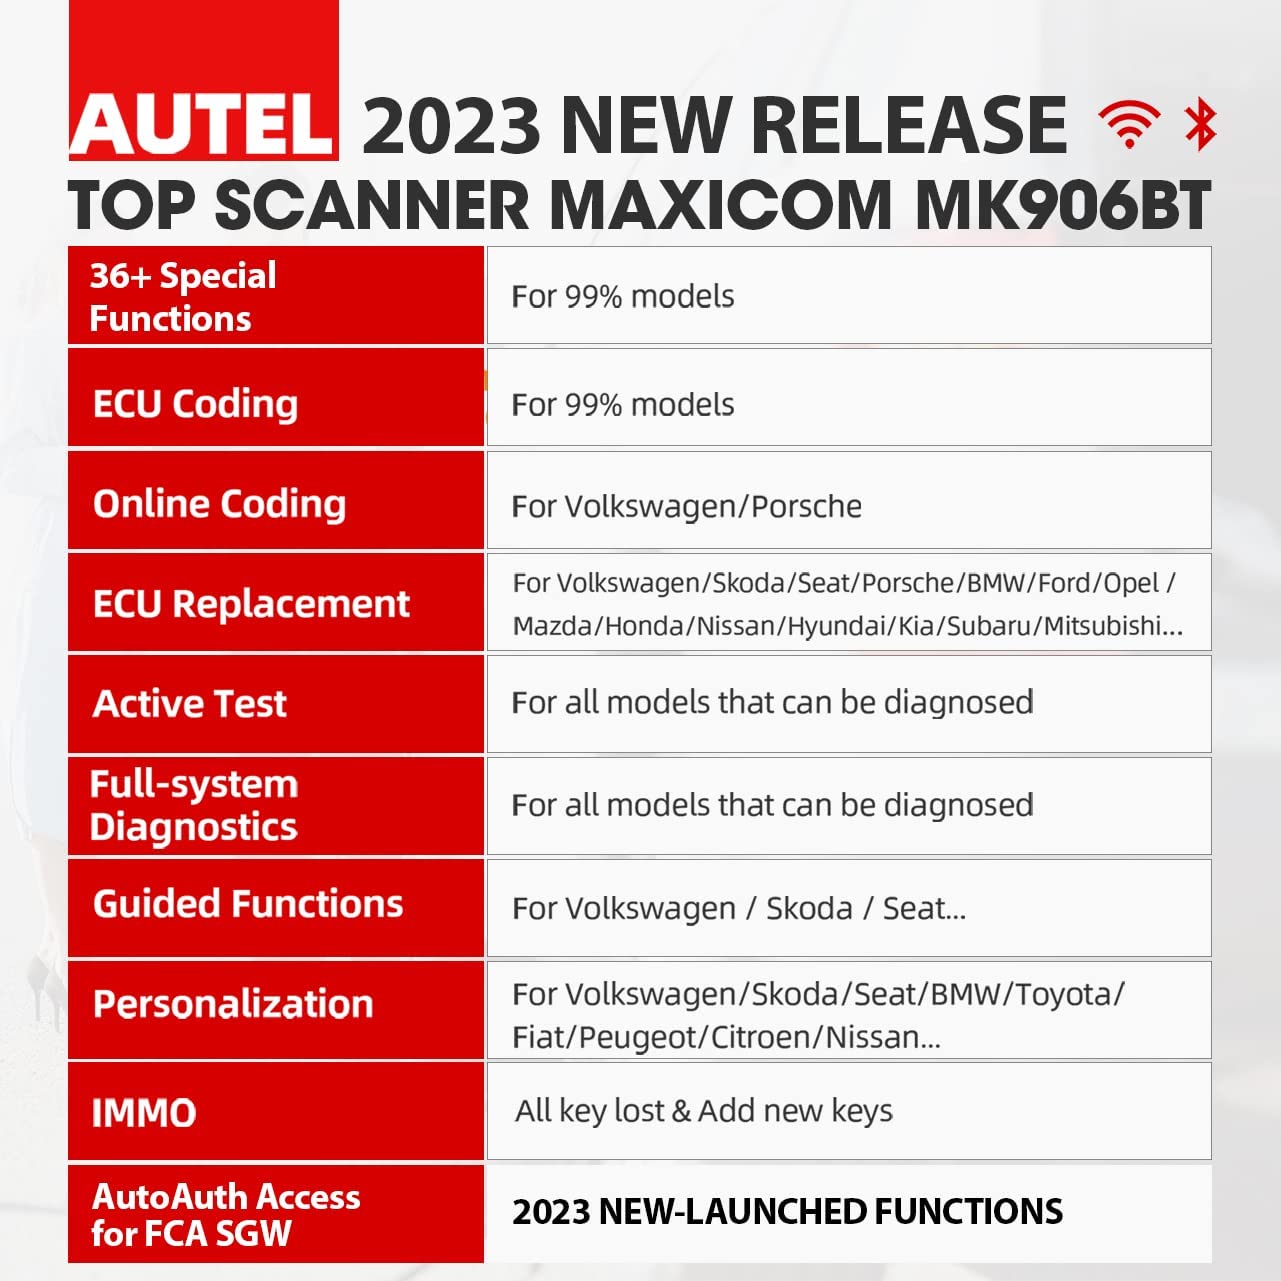 Autel MaxiCOM MK906BT Car Diagnostic Scan Tool ECU Coding, 36 Services, Active Test,Same as MaxiSys MS906BT/MS908/MK908